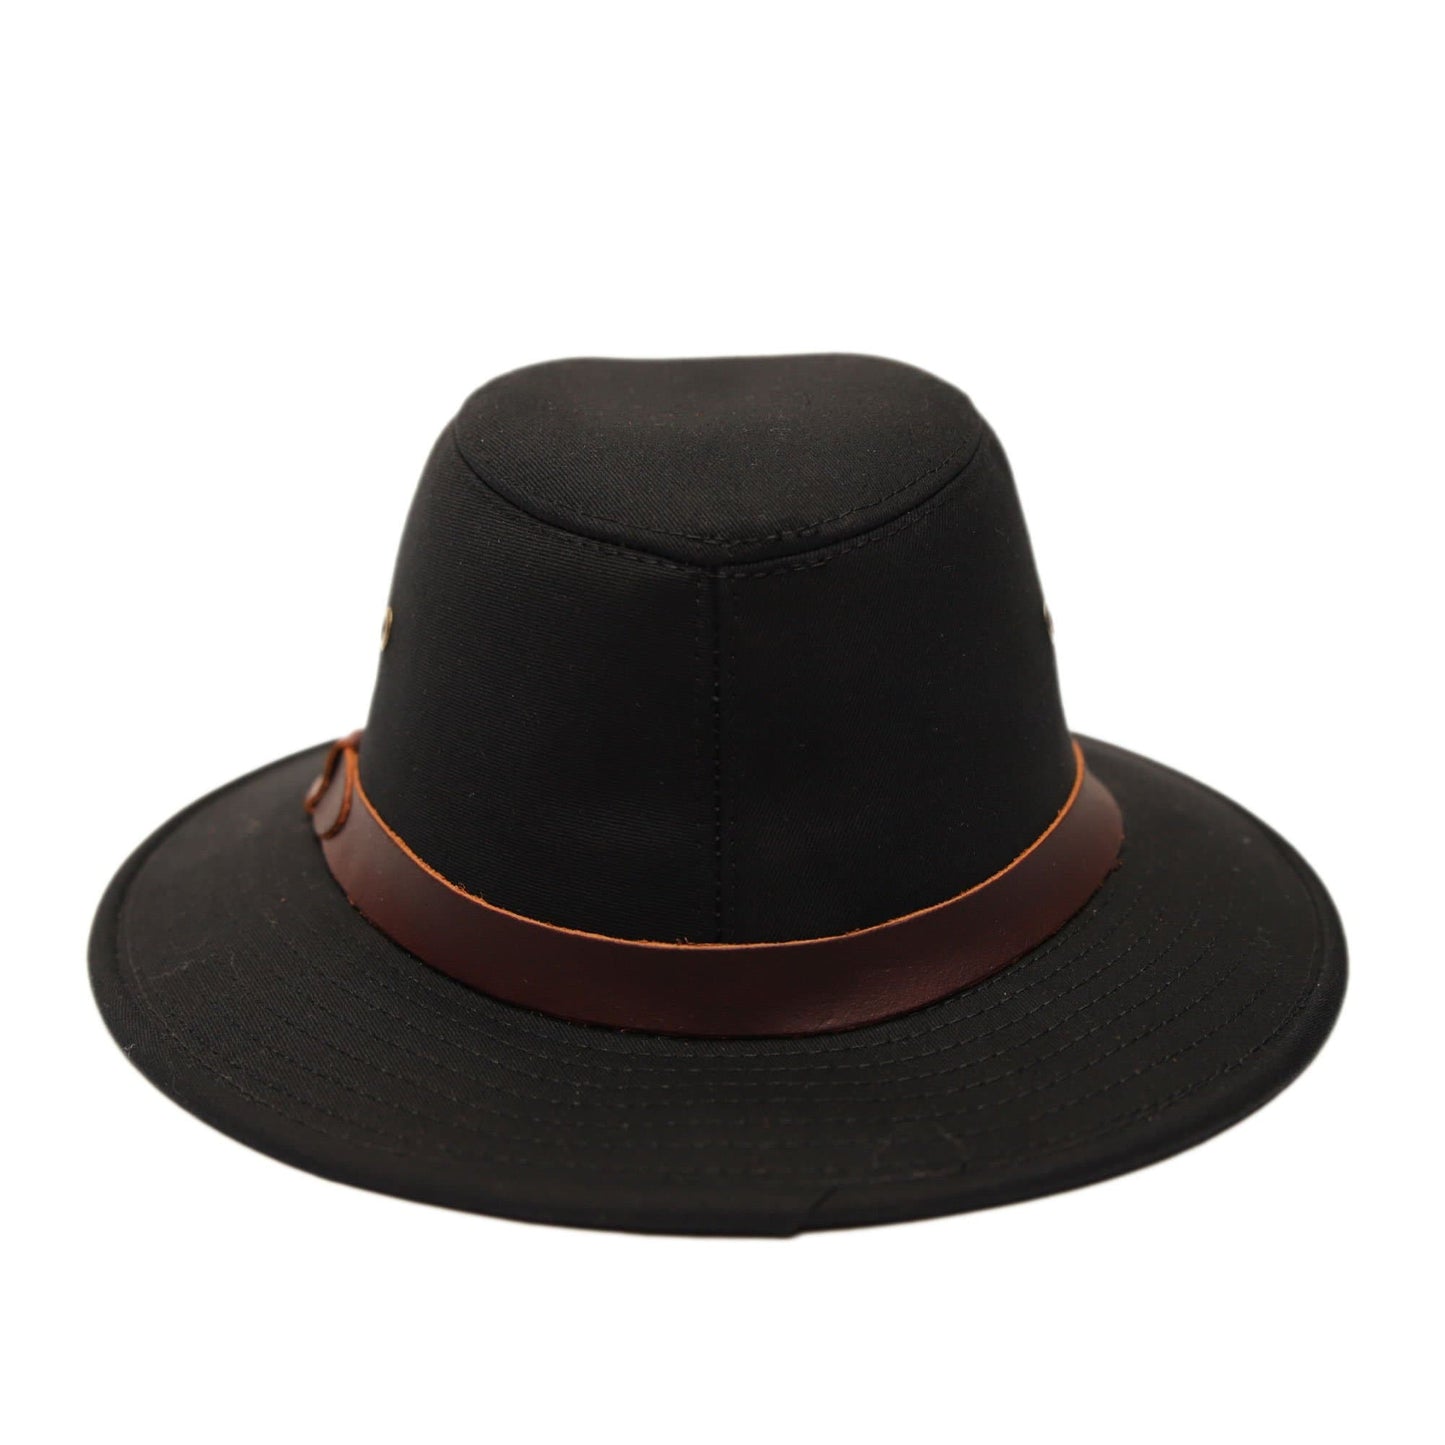 Classic Hat Series - Wayward Tribly Stovepipe Black